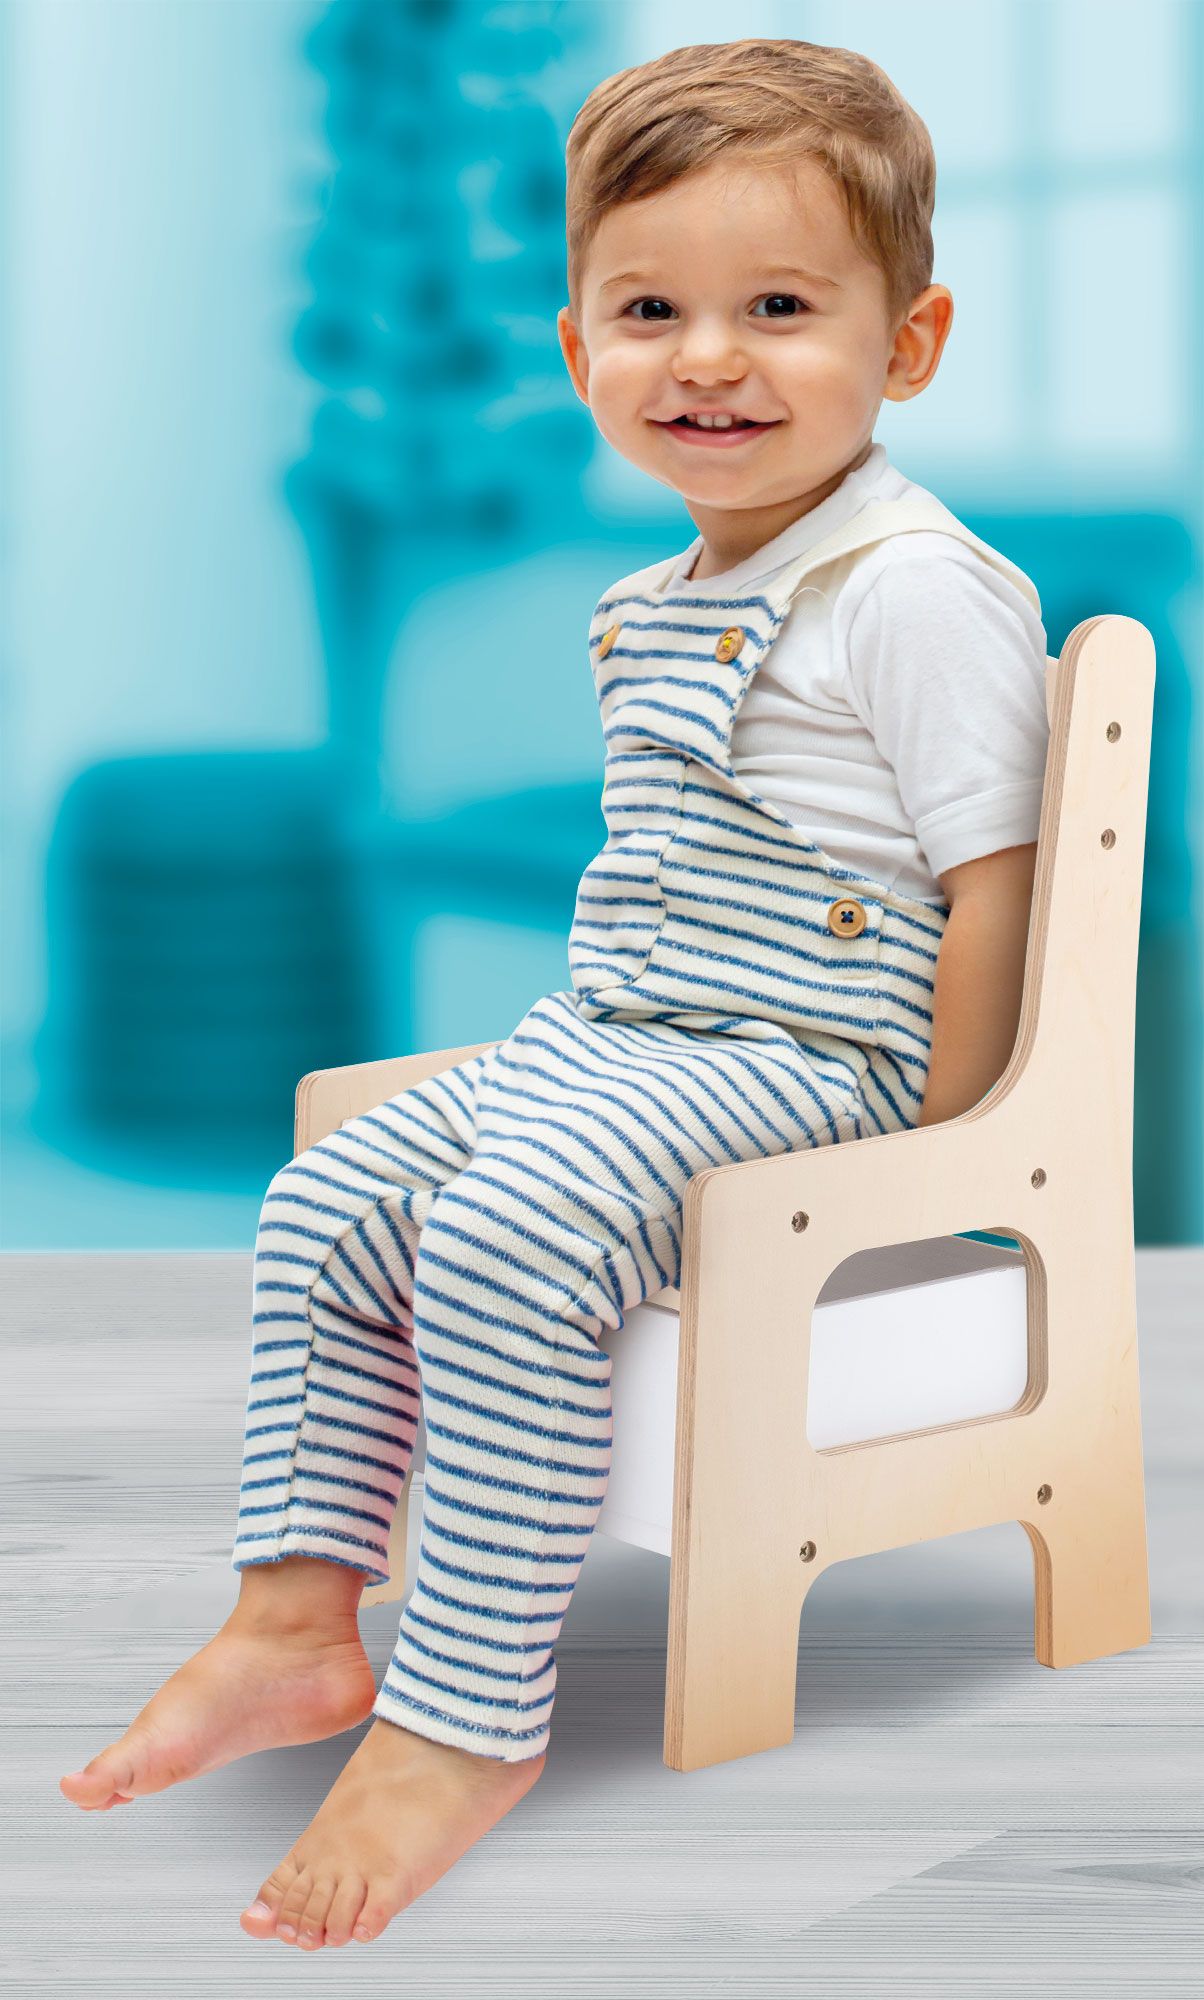 Montessori wood toy box chair - LISCIANI